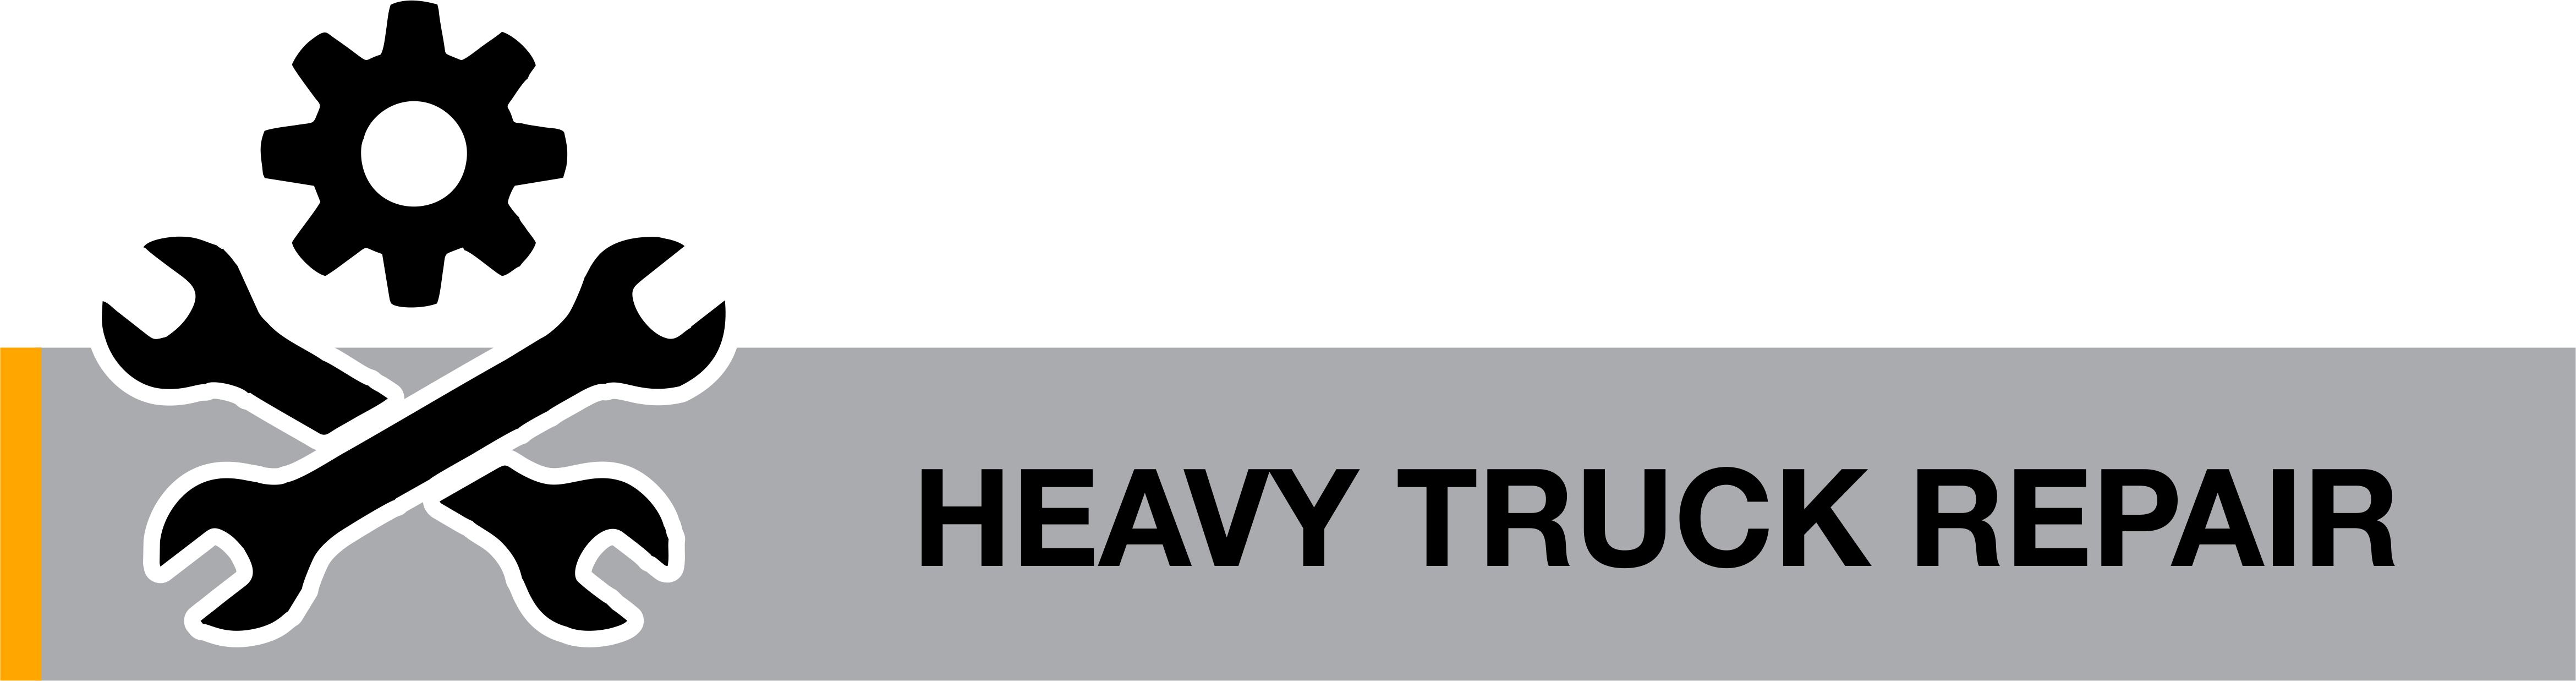 Heavy Truck